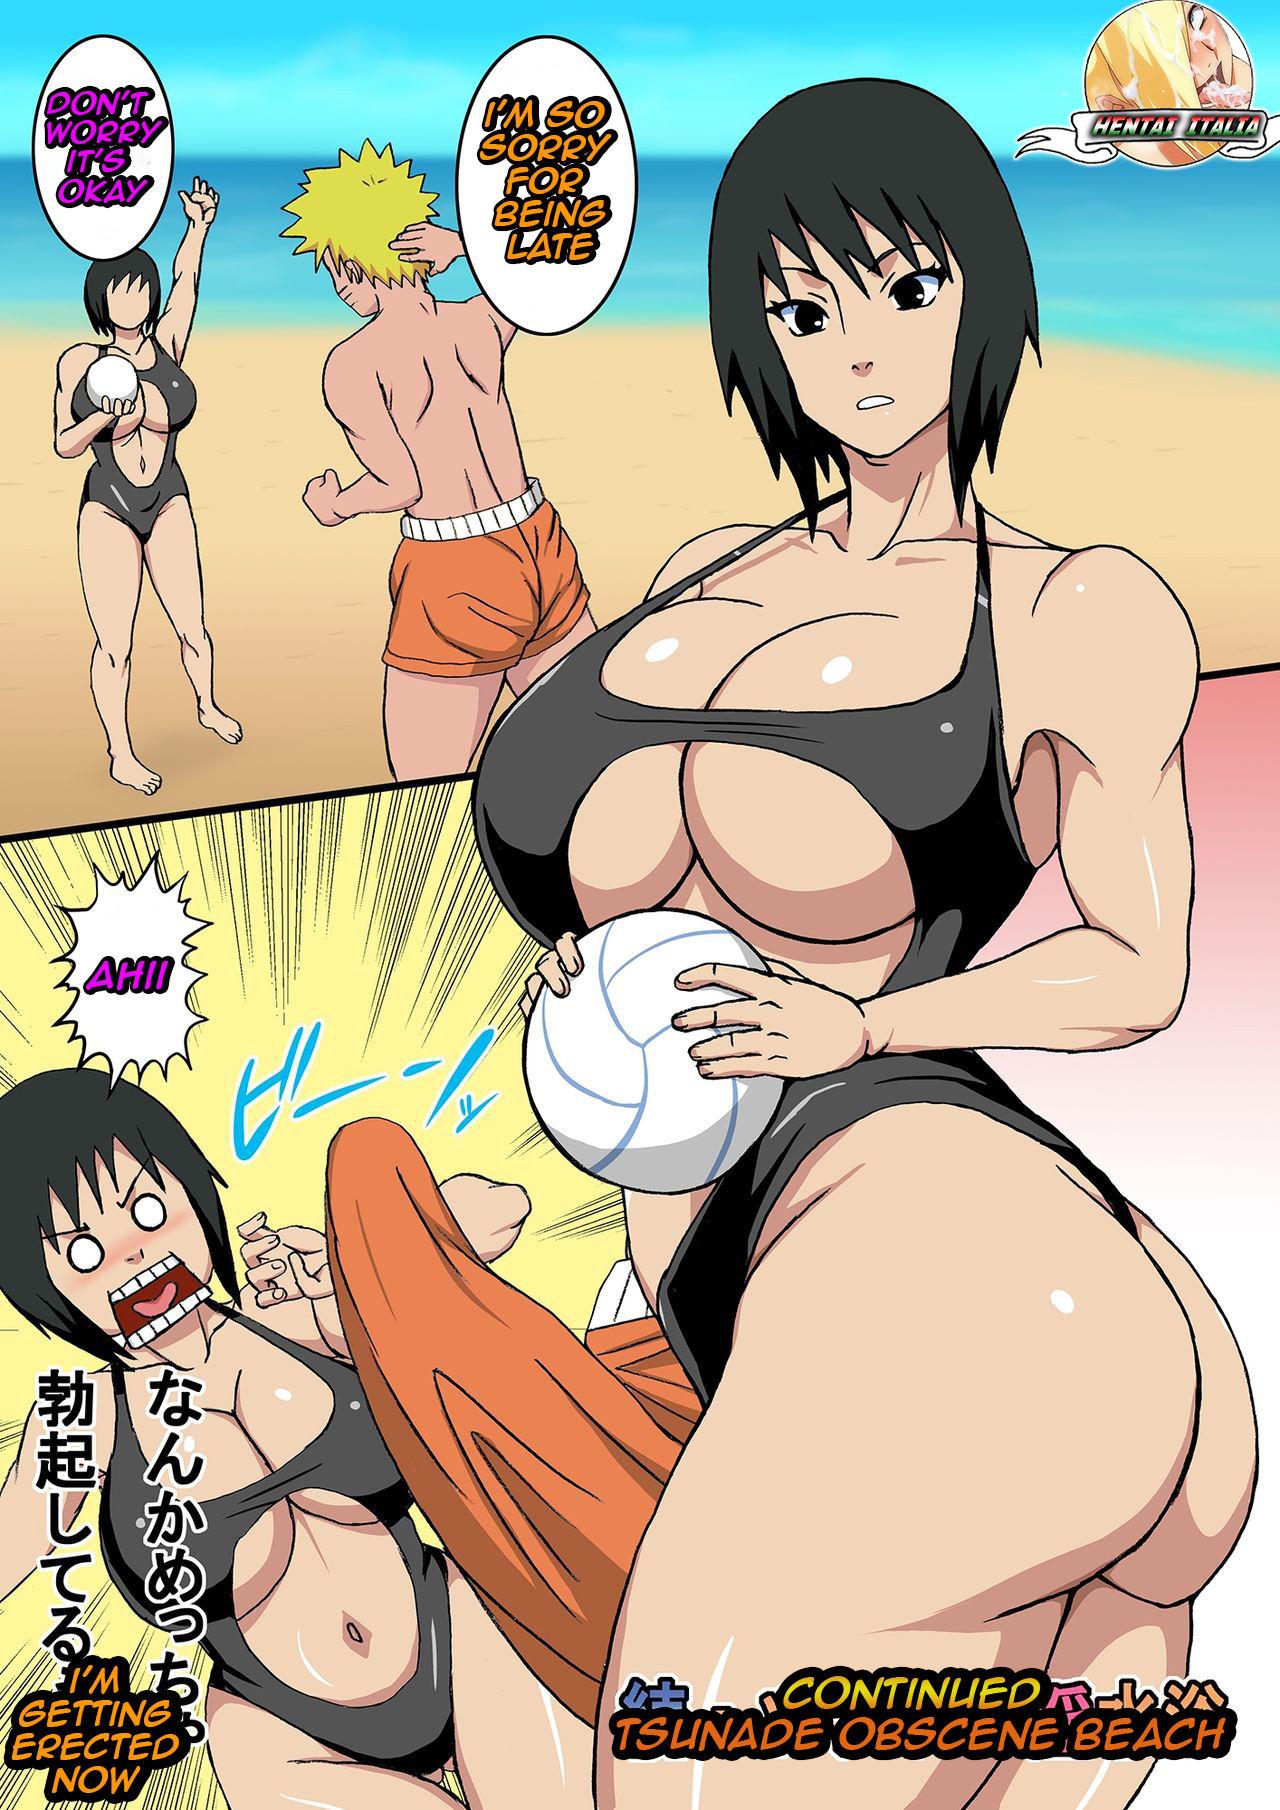 Sexy Whores After Tsunade's Obscene Beach - Naruto Dicks - Page 3